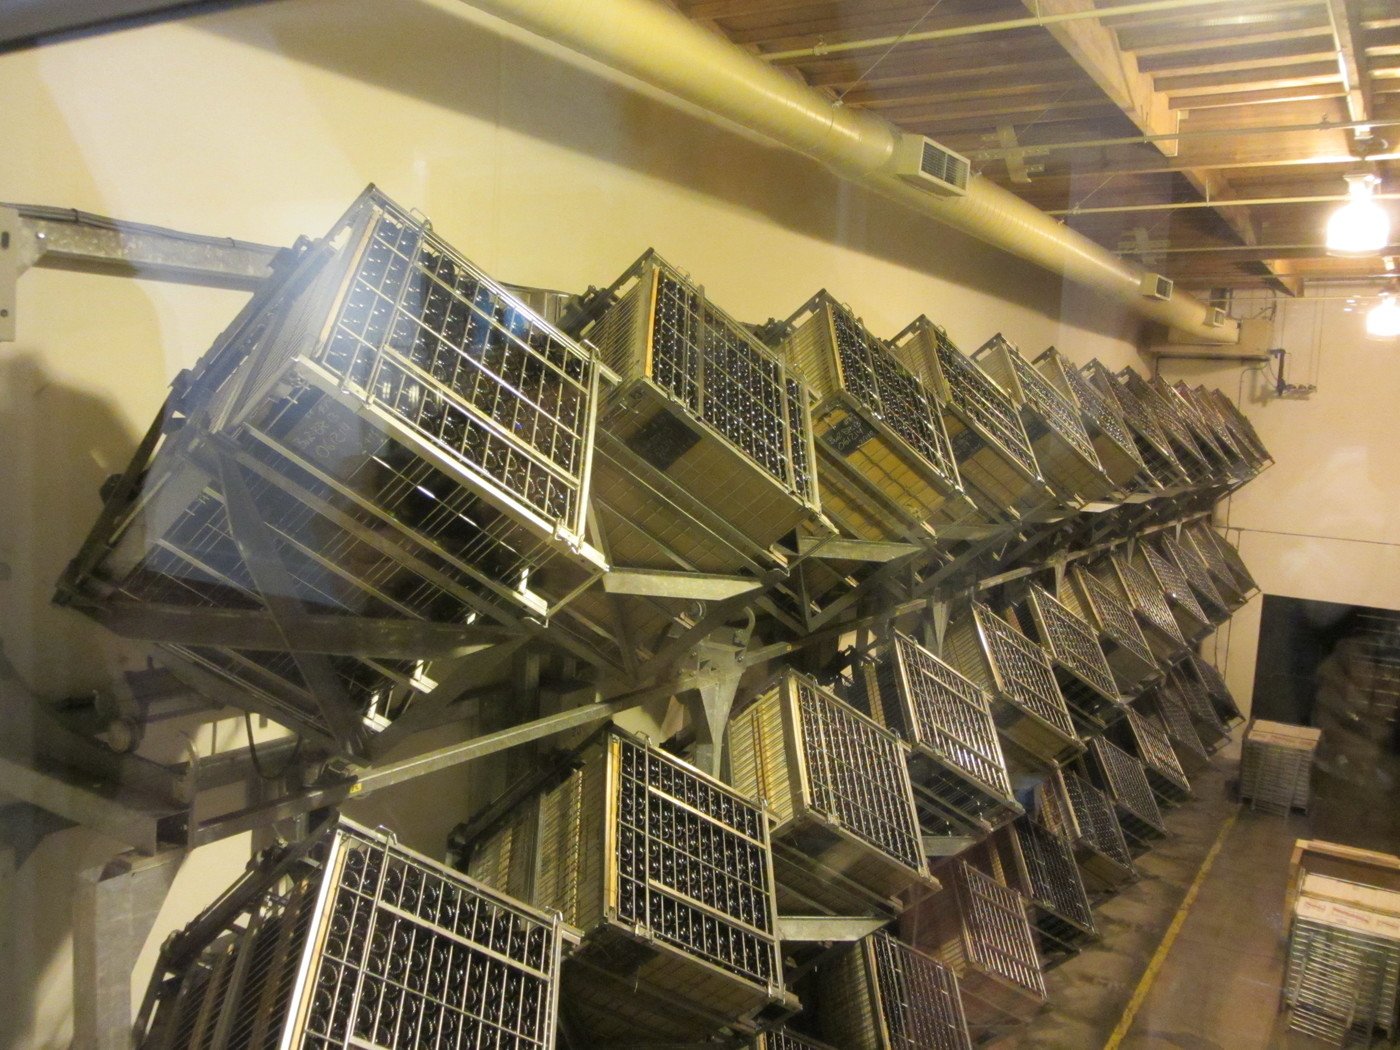 Mechanical riddling rack at Mumm, Napa